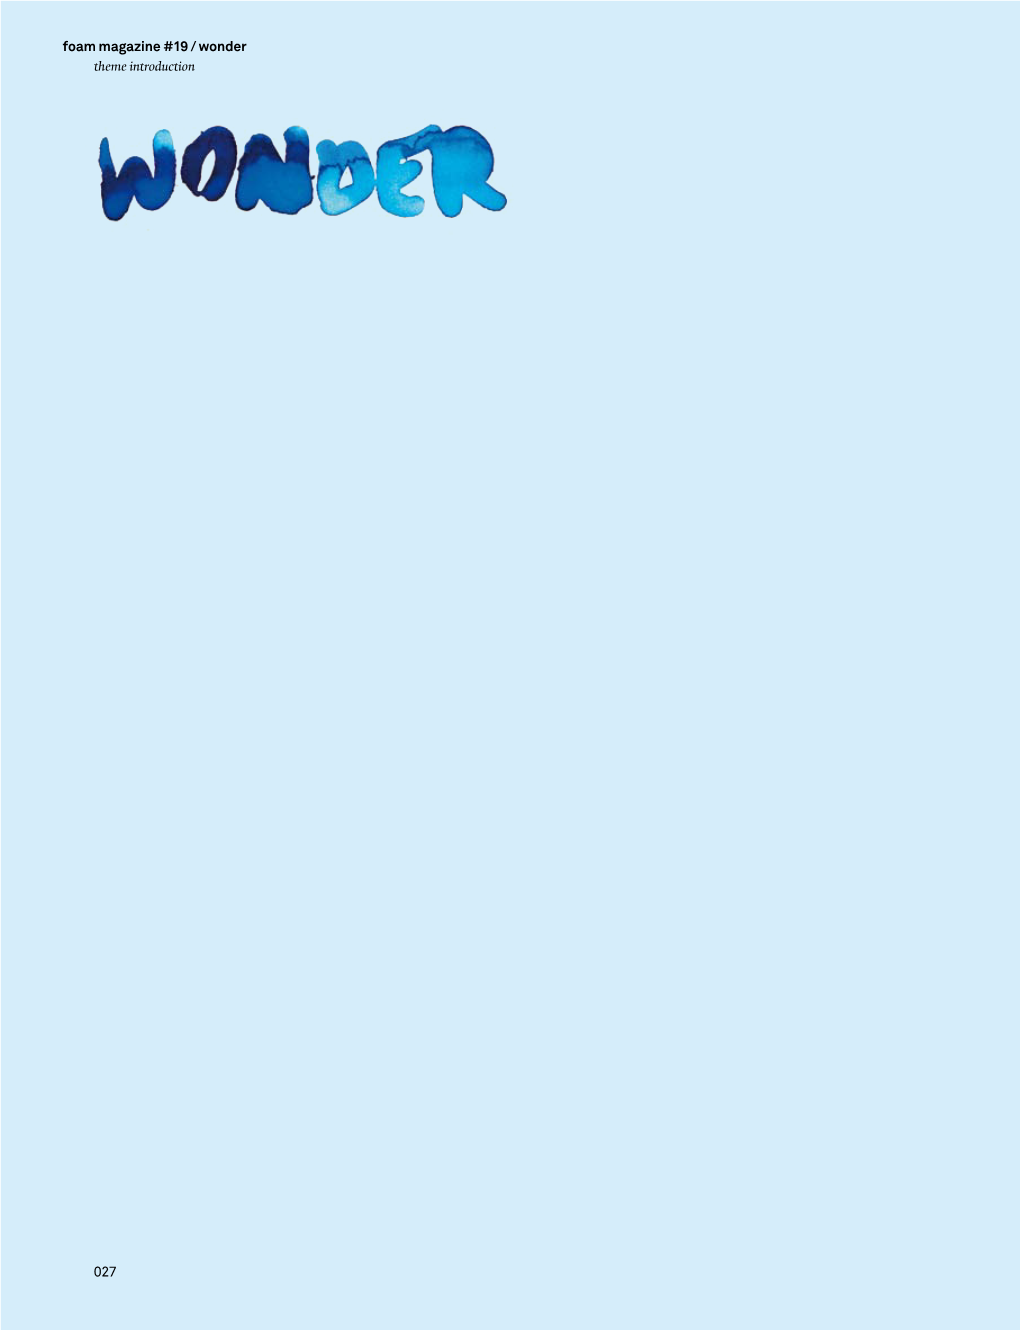 Foam Magazine #19 / Wonder Theme Introduction